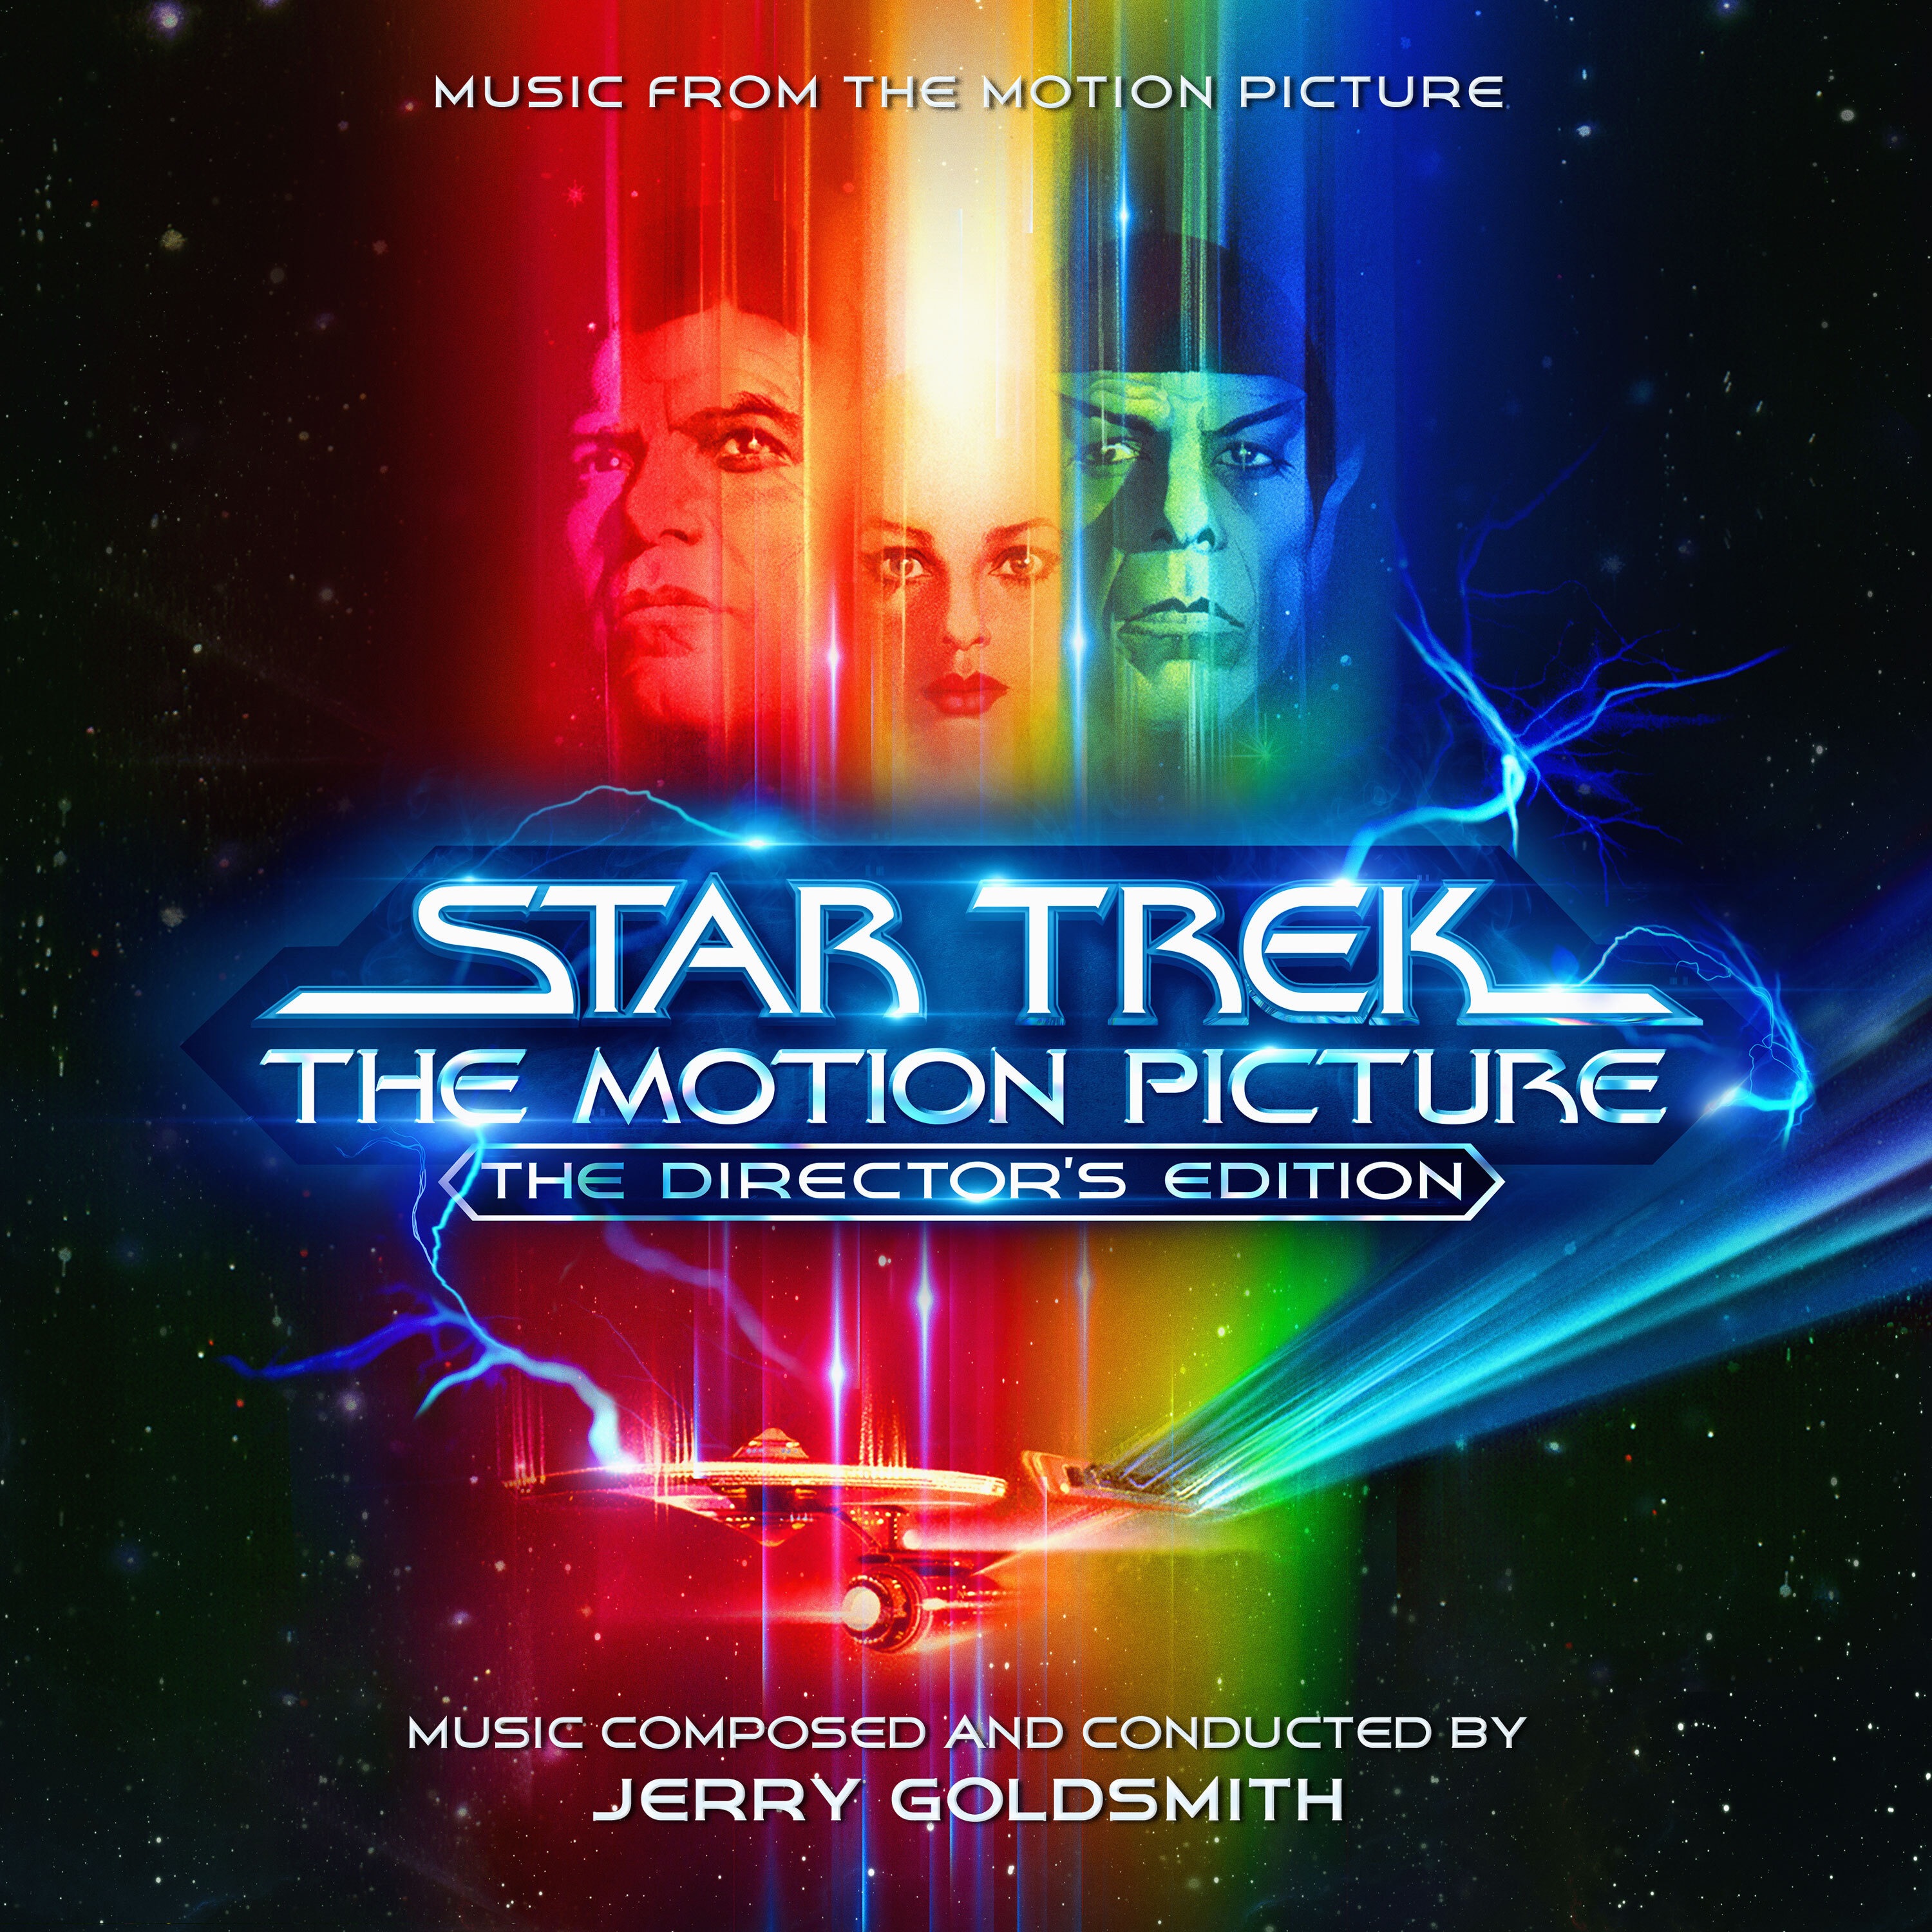 star trek 2016 soundtrack